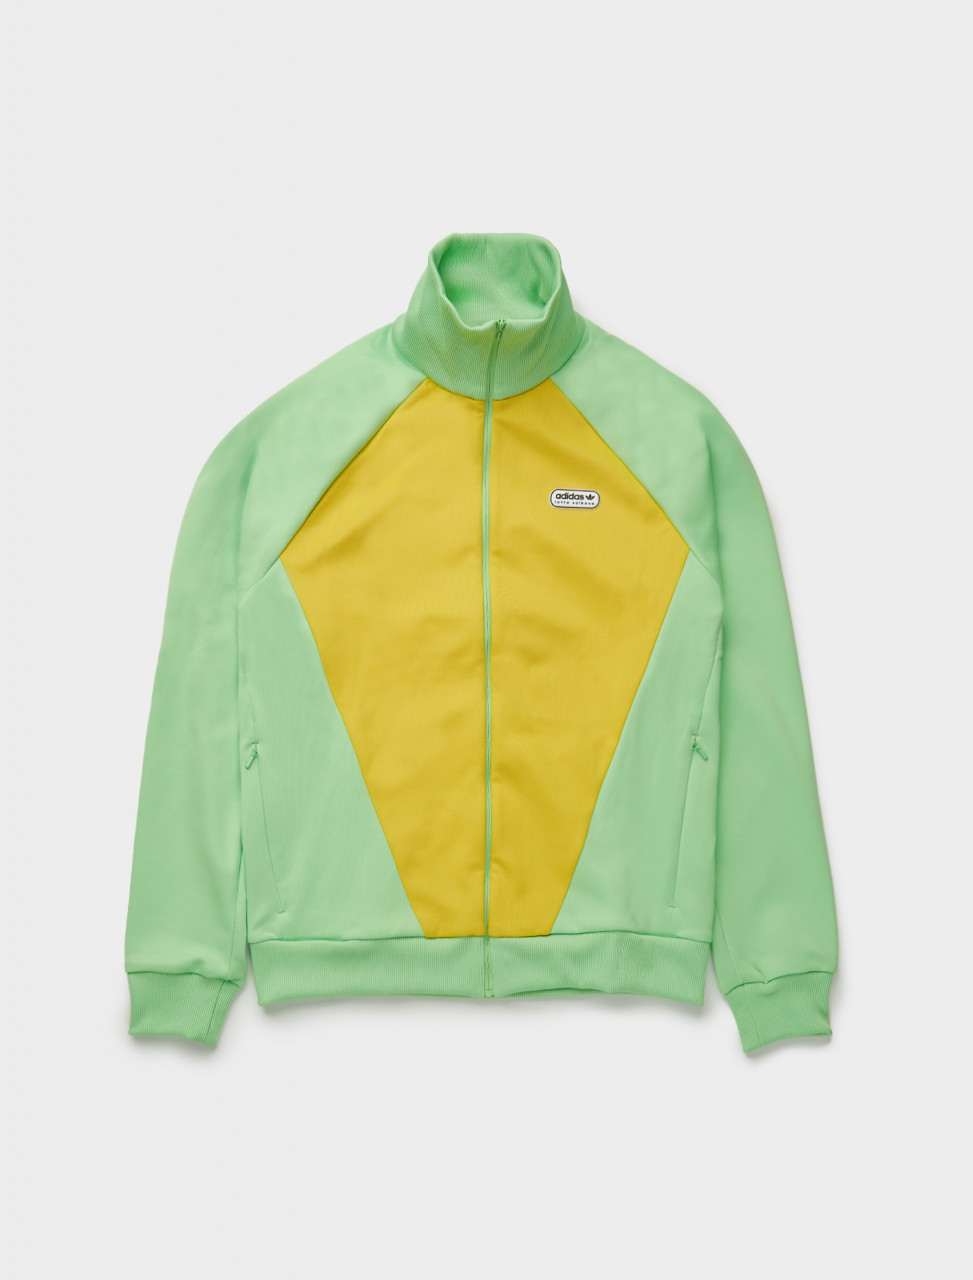 adidas green yellow jacket